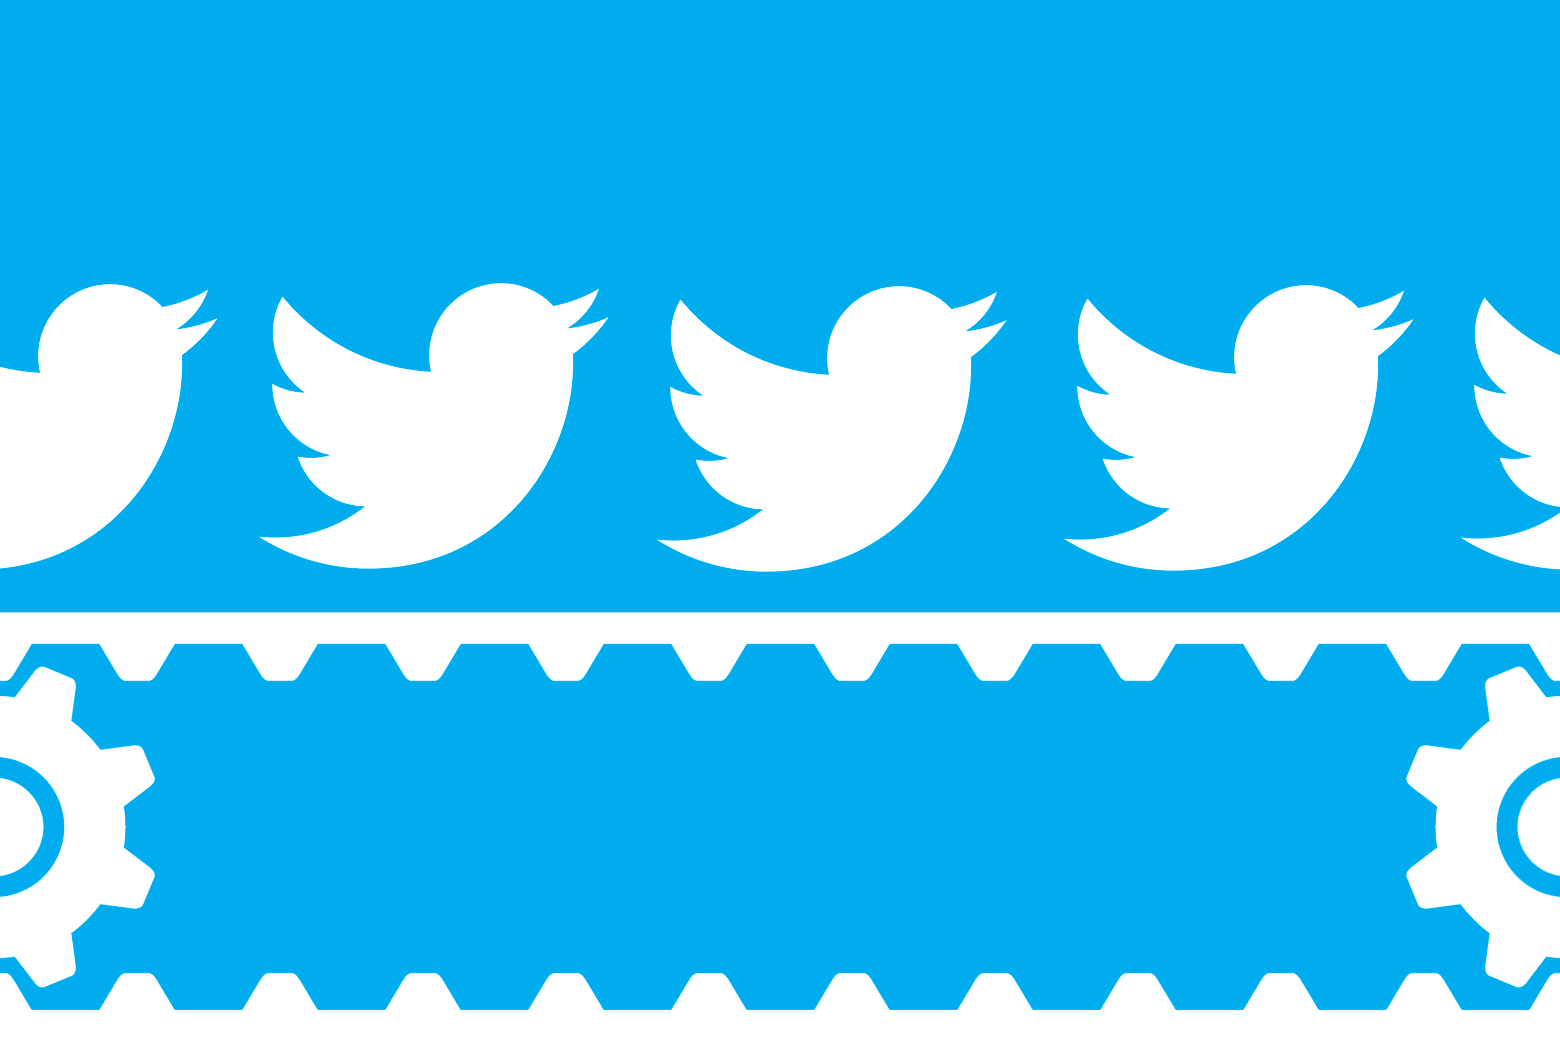 An illustration of Twitter birds on a conveyor belt.